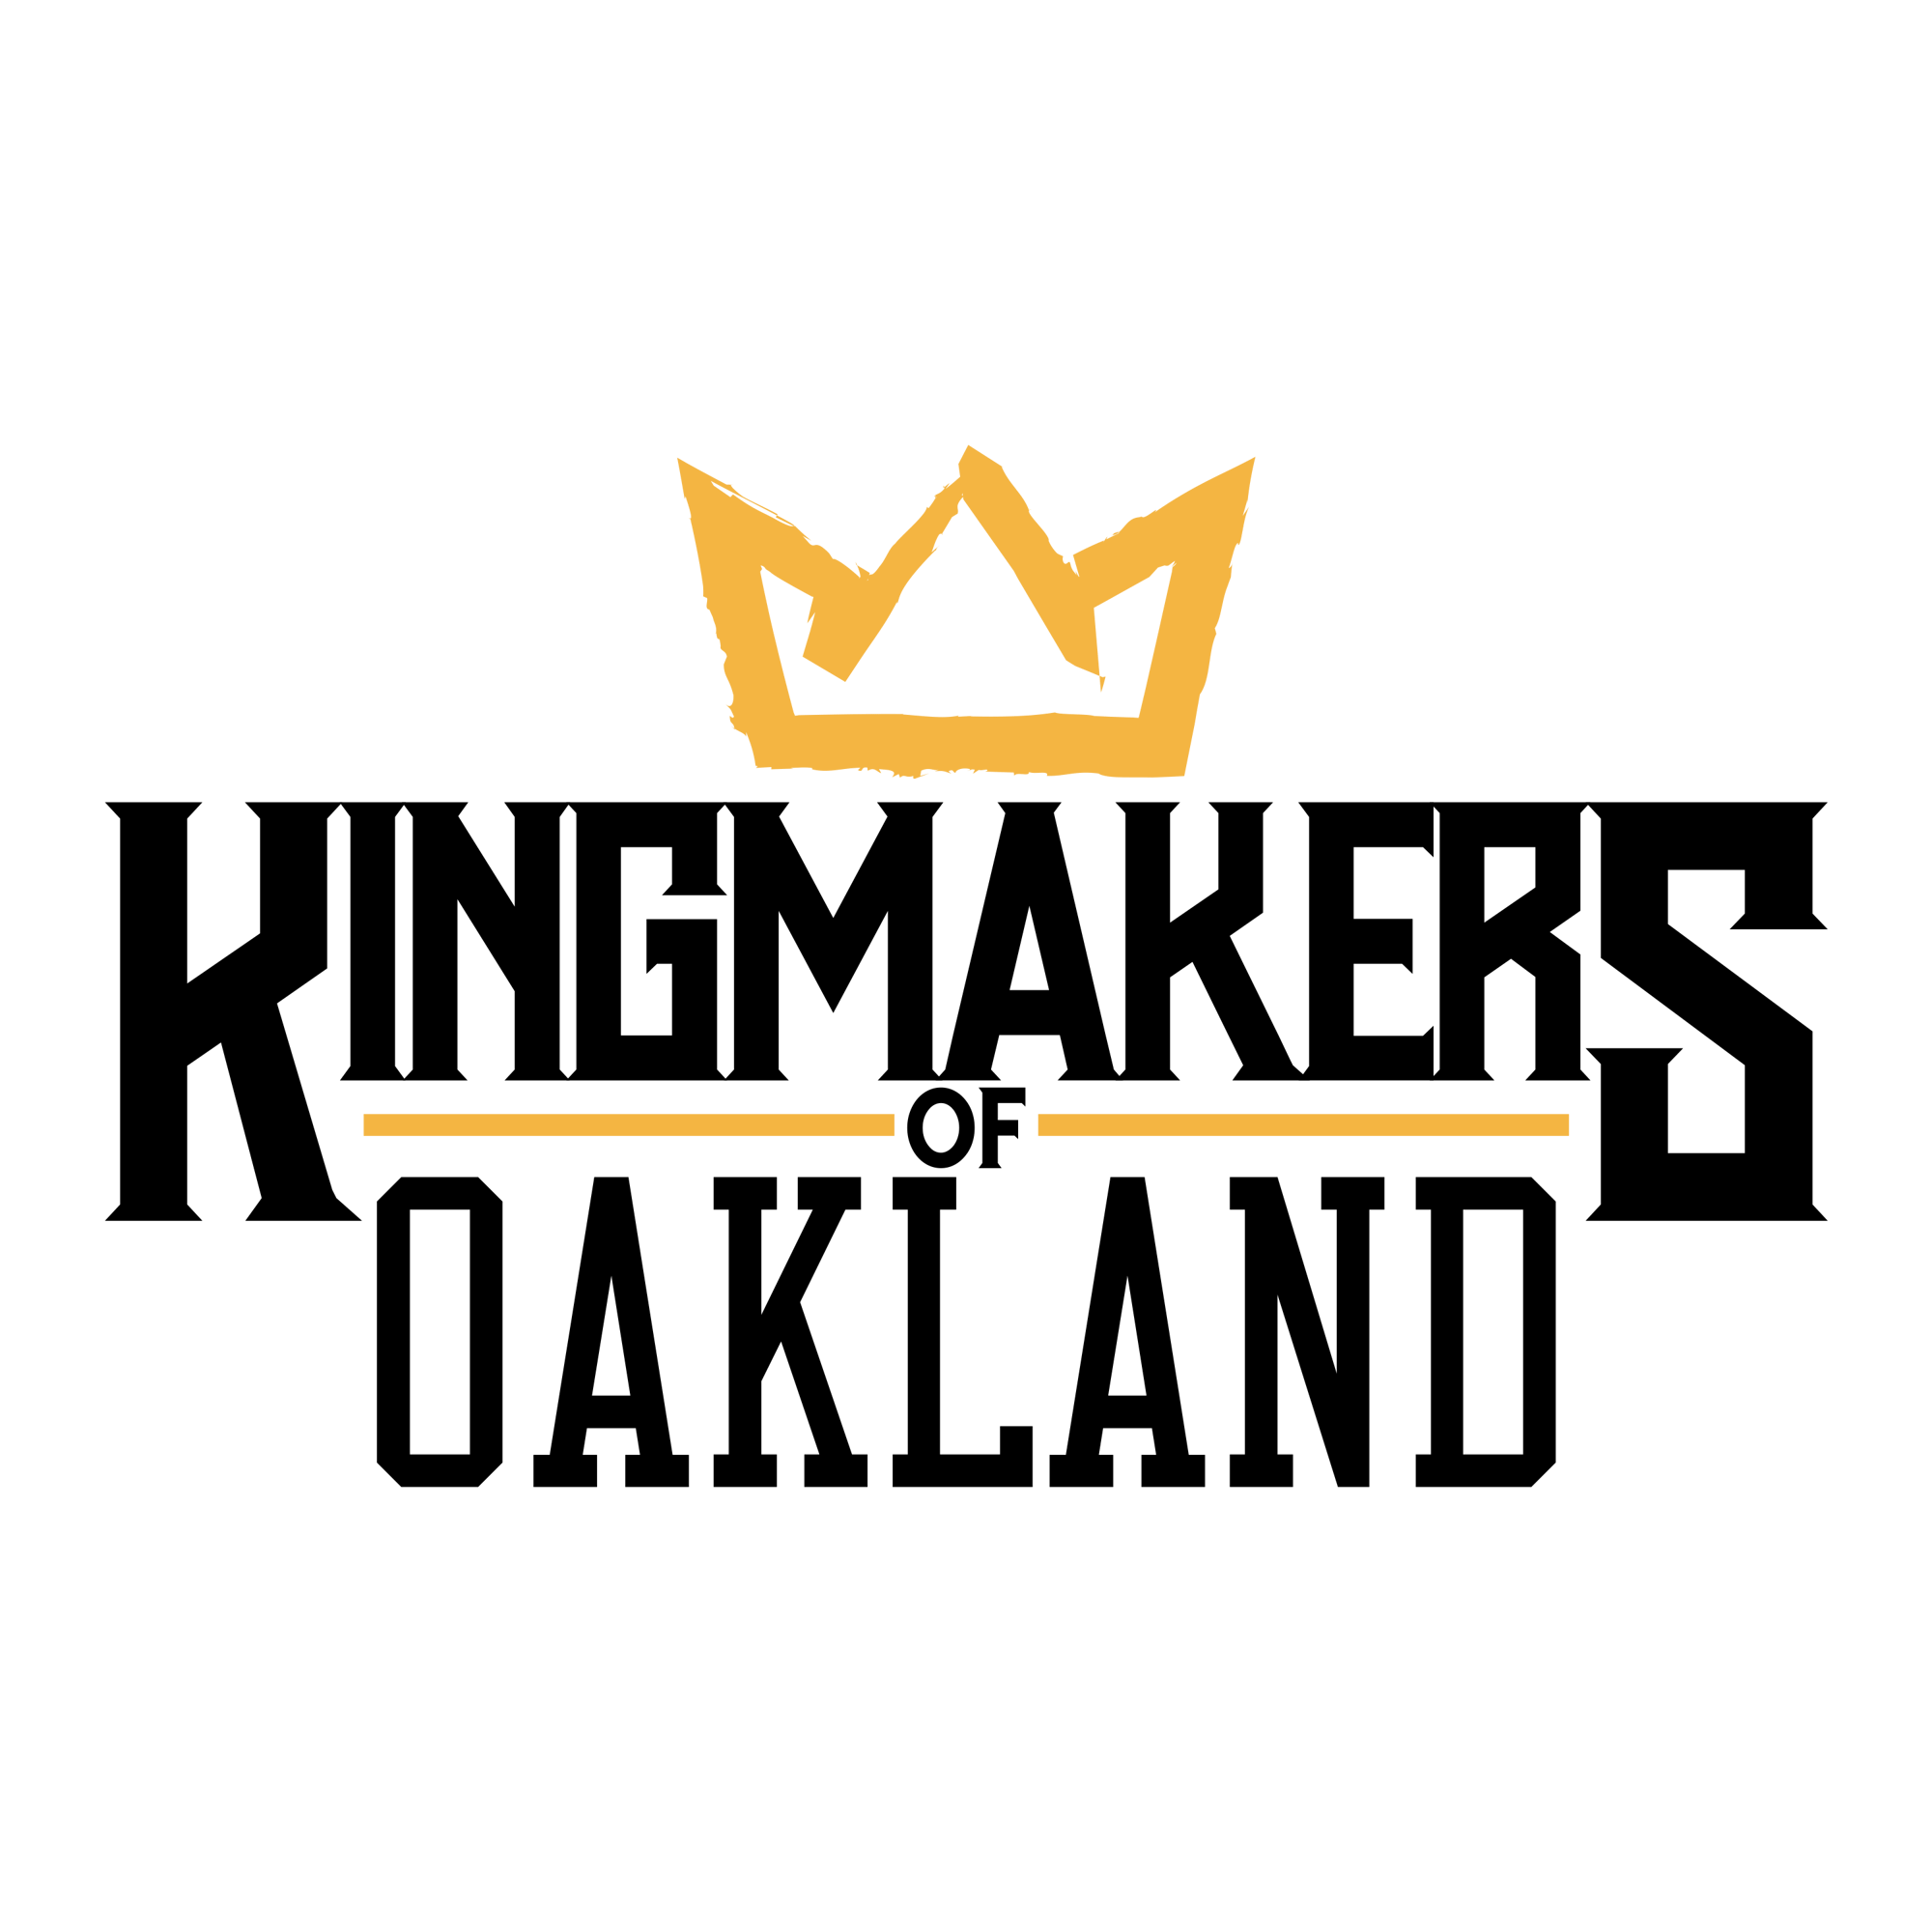 Kingmakers of Oakland